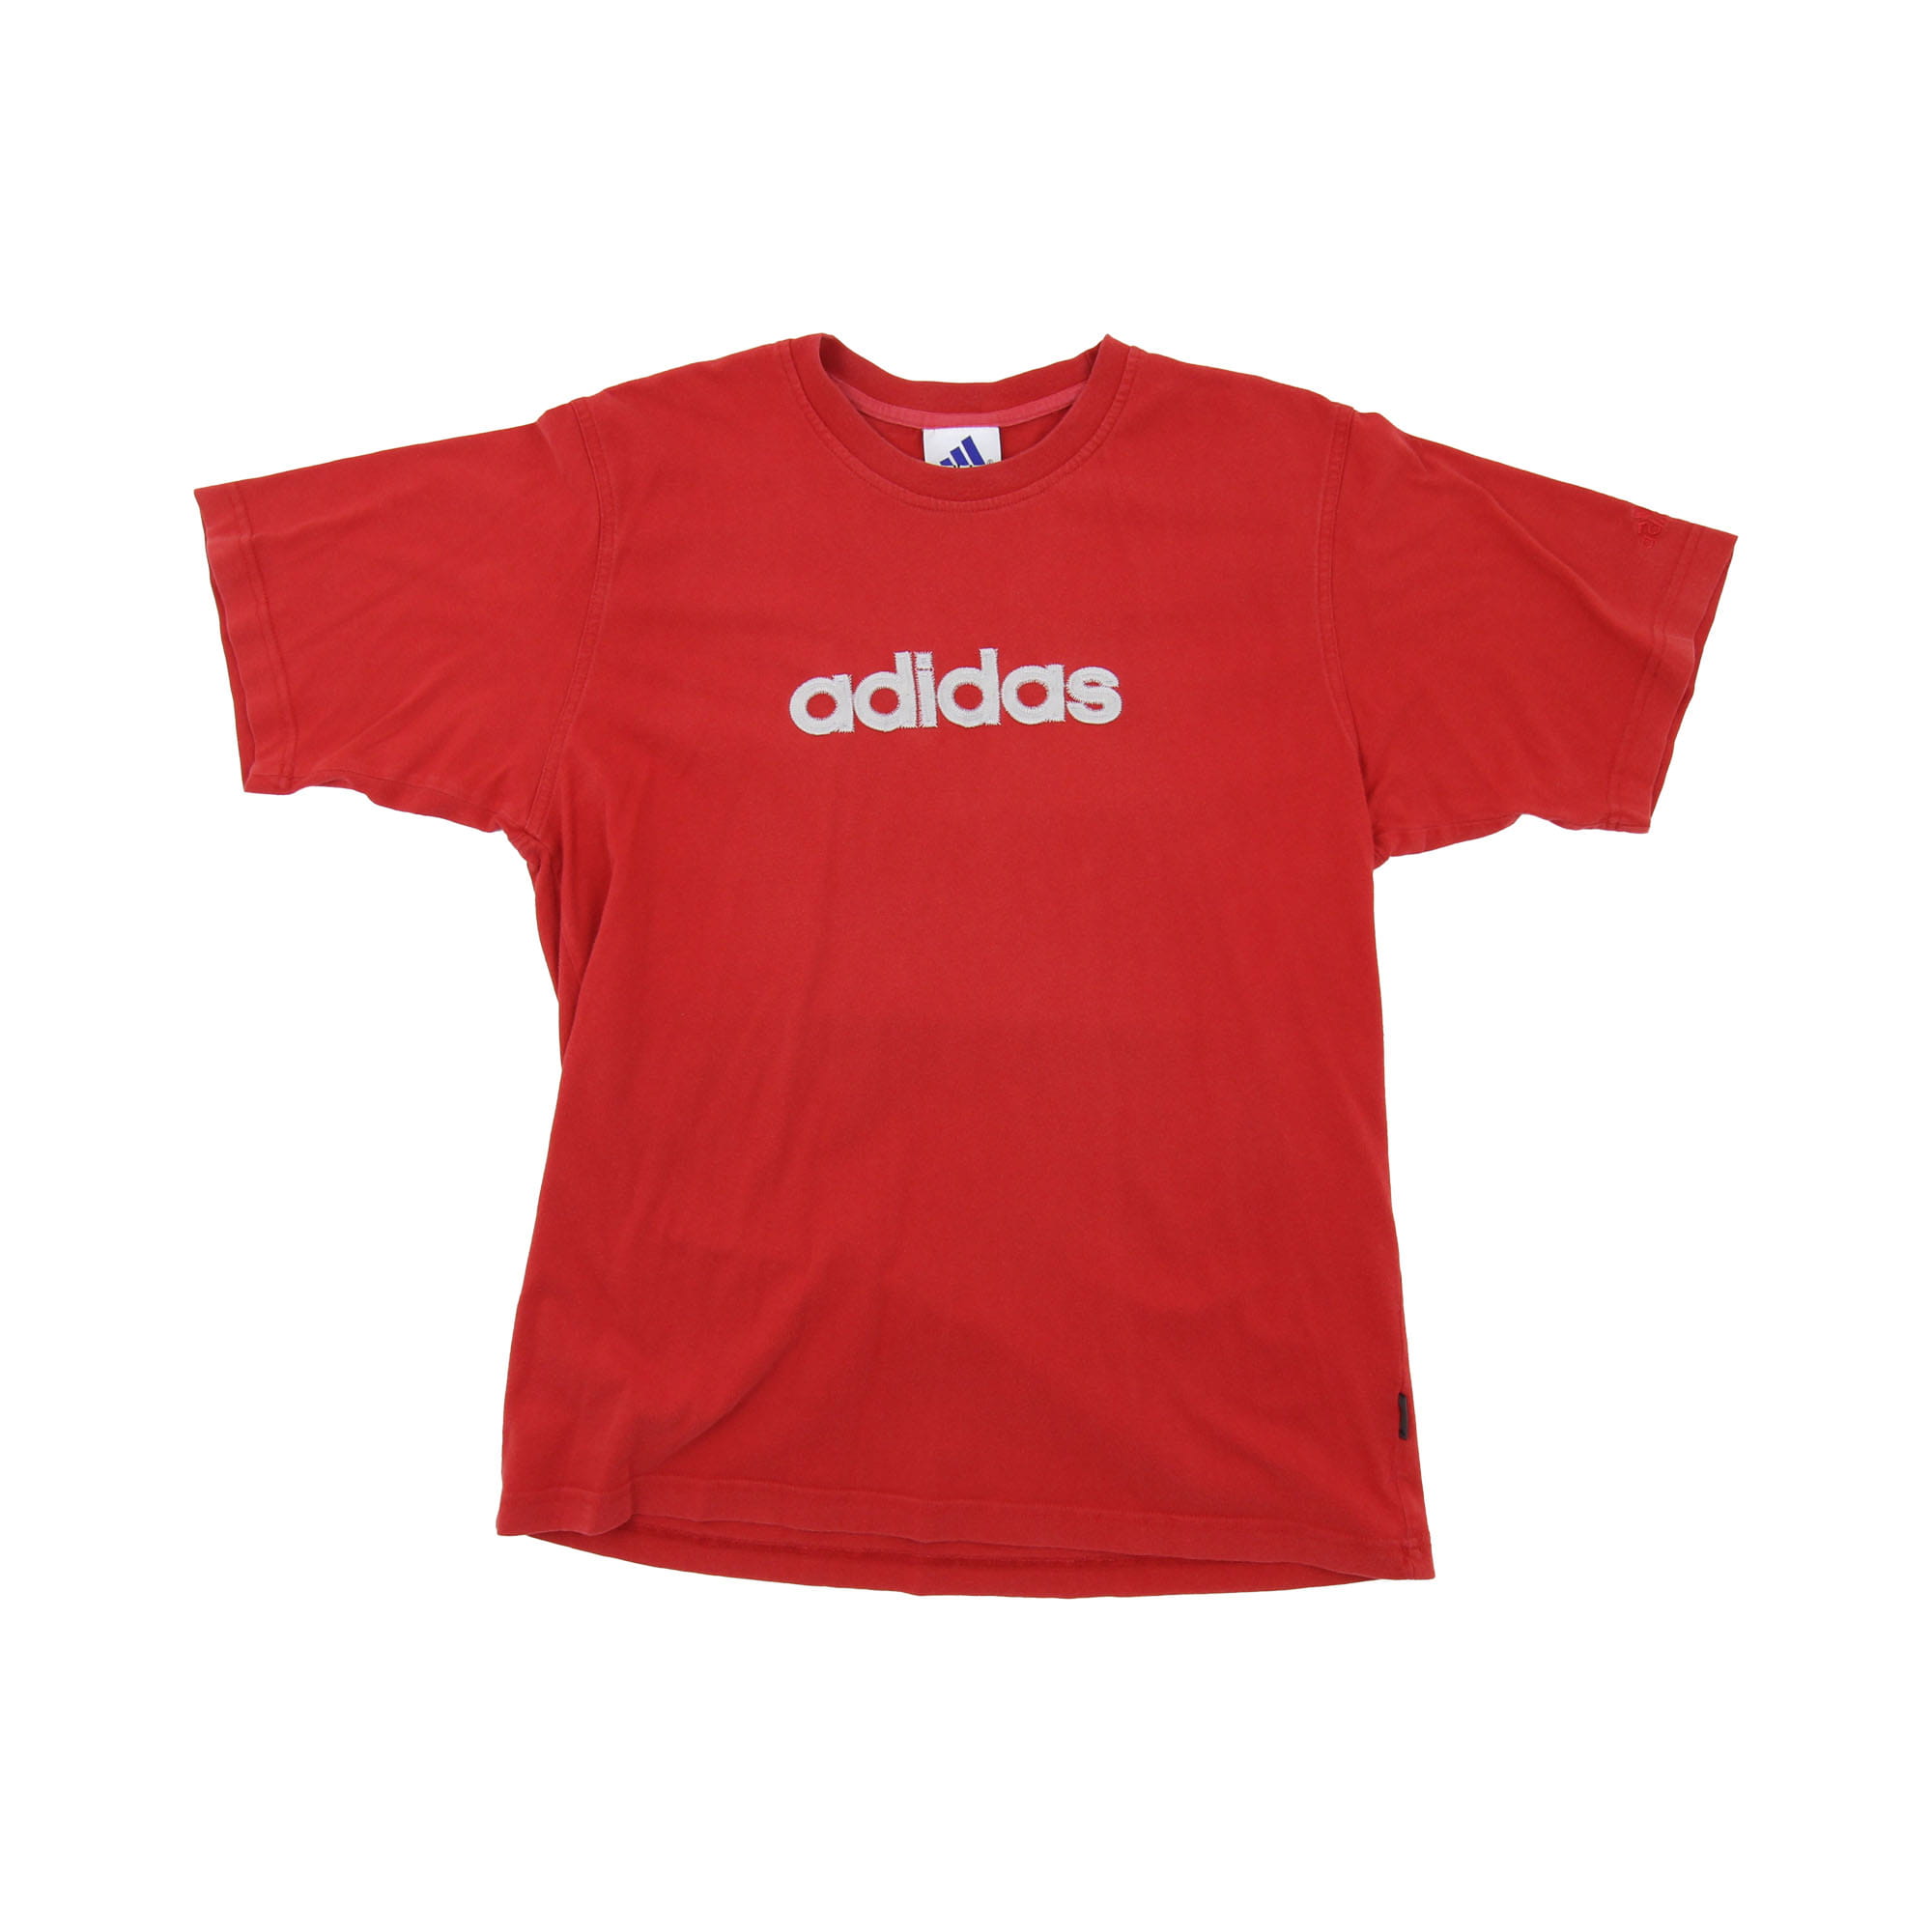 Adidas T-Shirt Red -  L